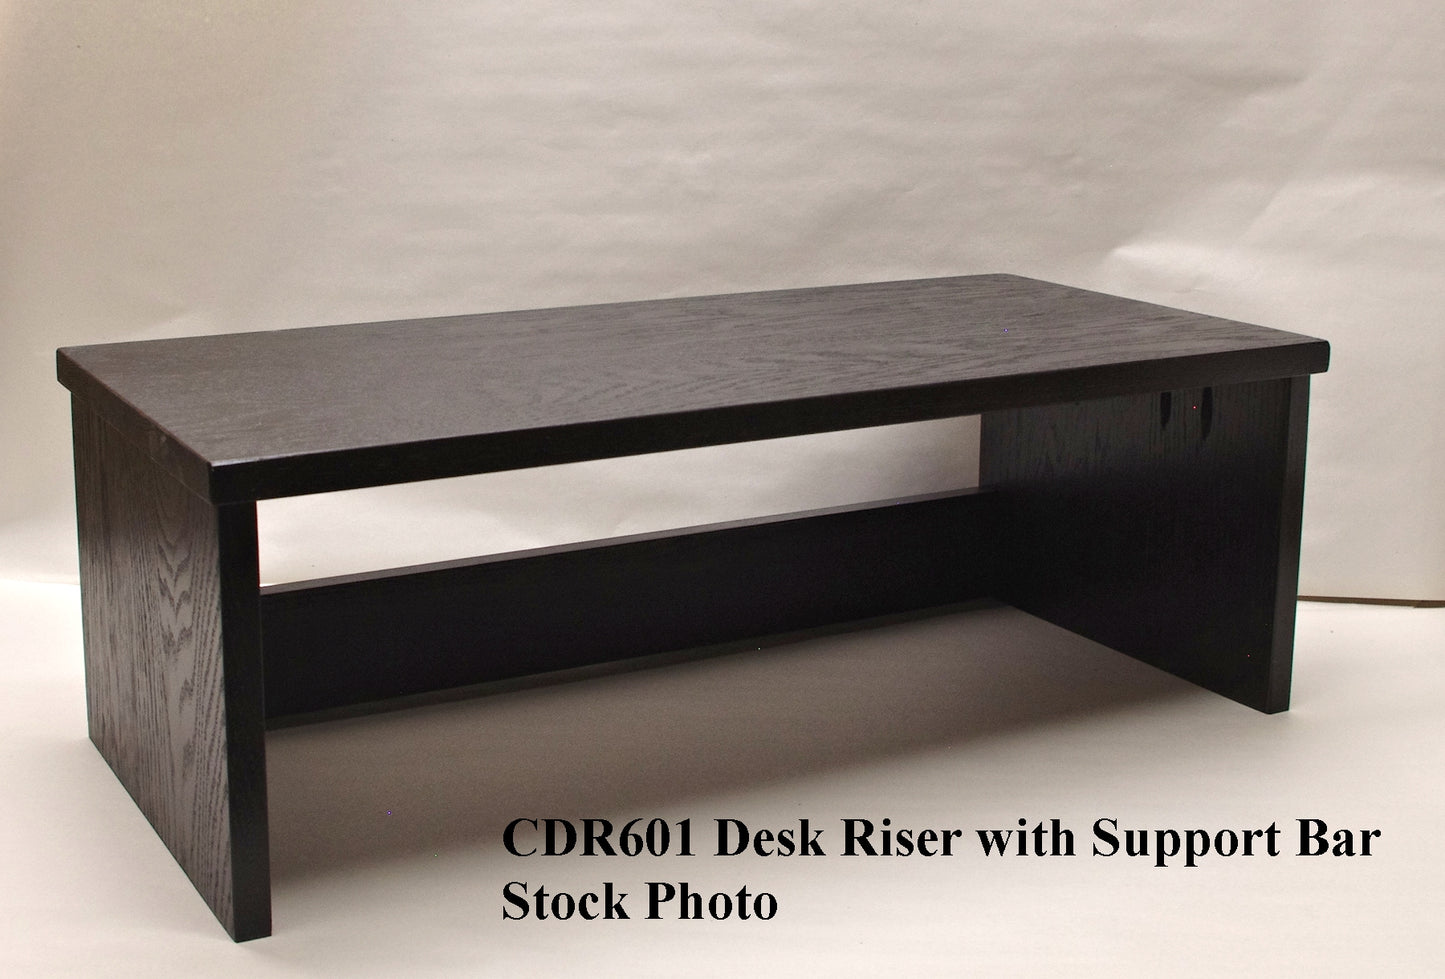 CDR601 Desk Riser with Support Bar - 32" Length